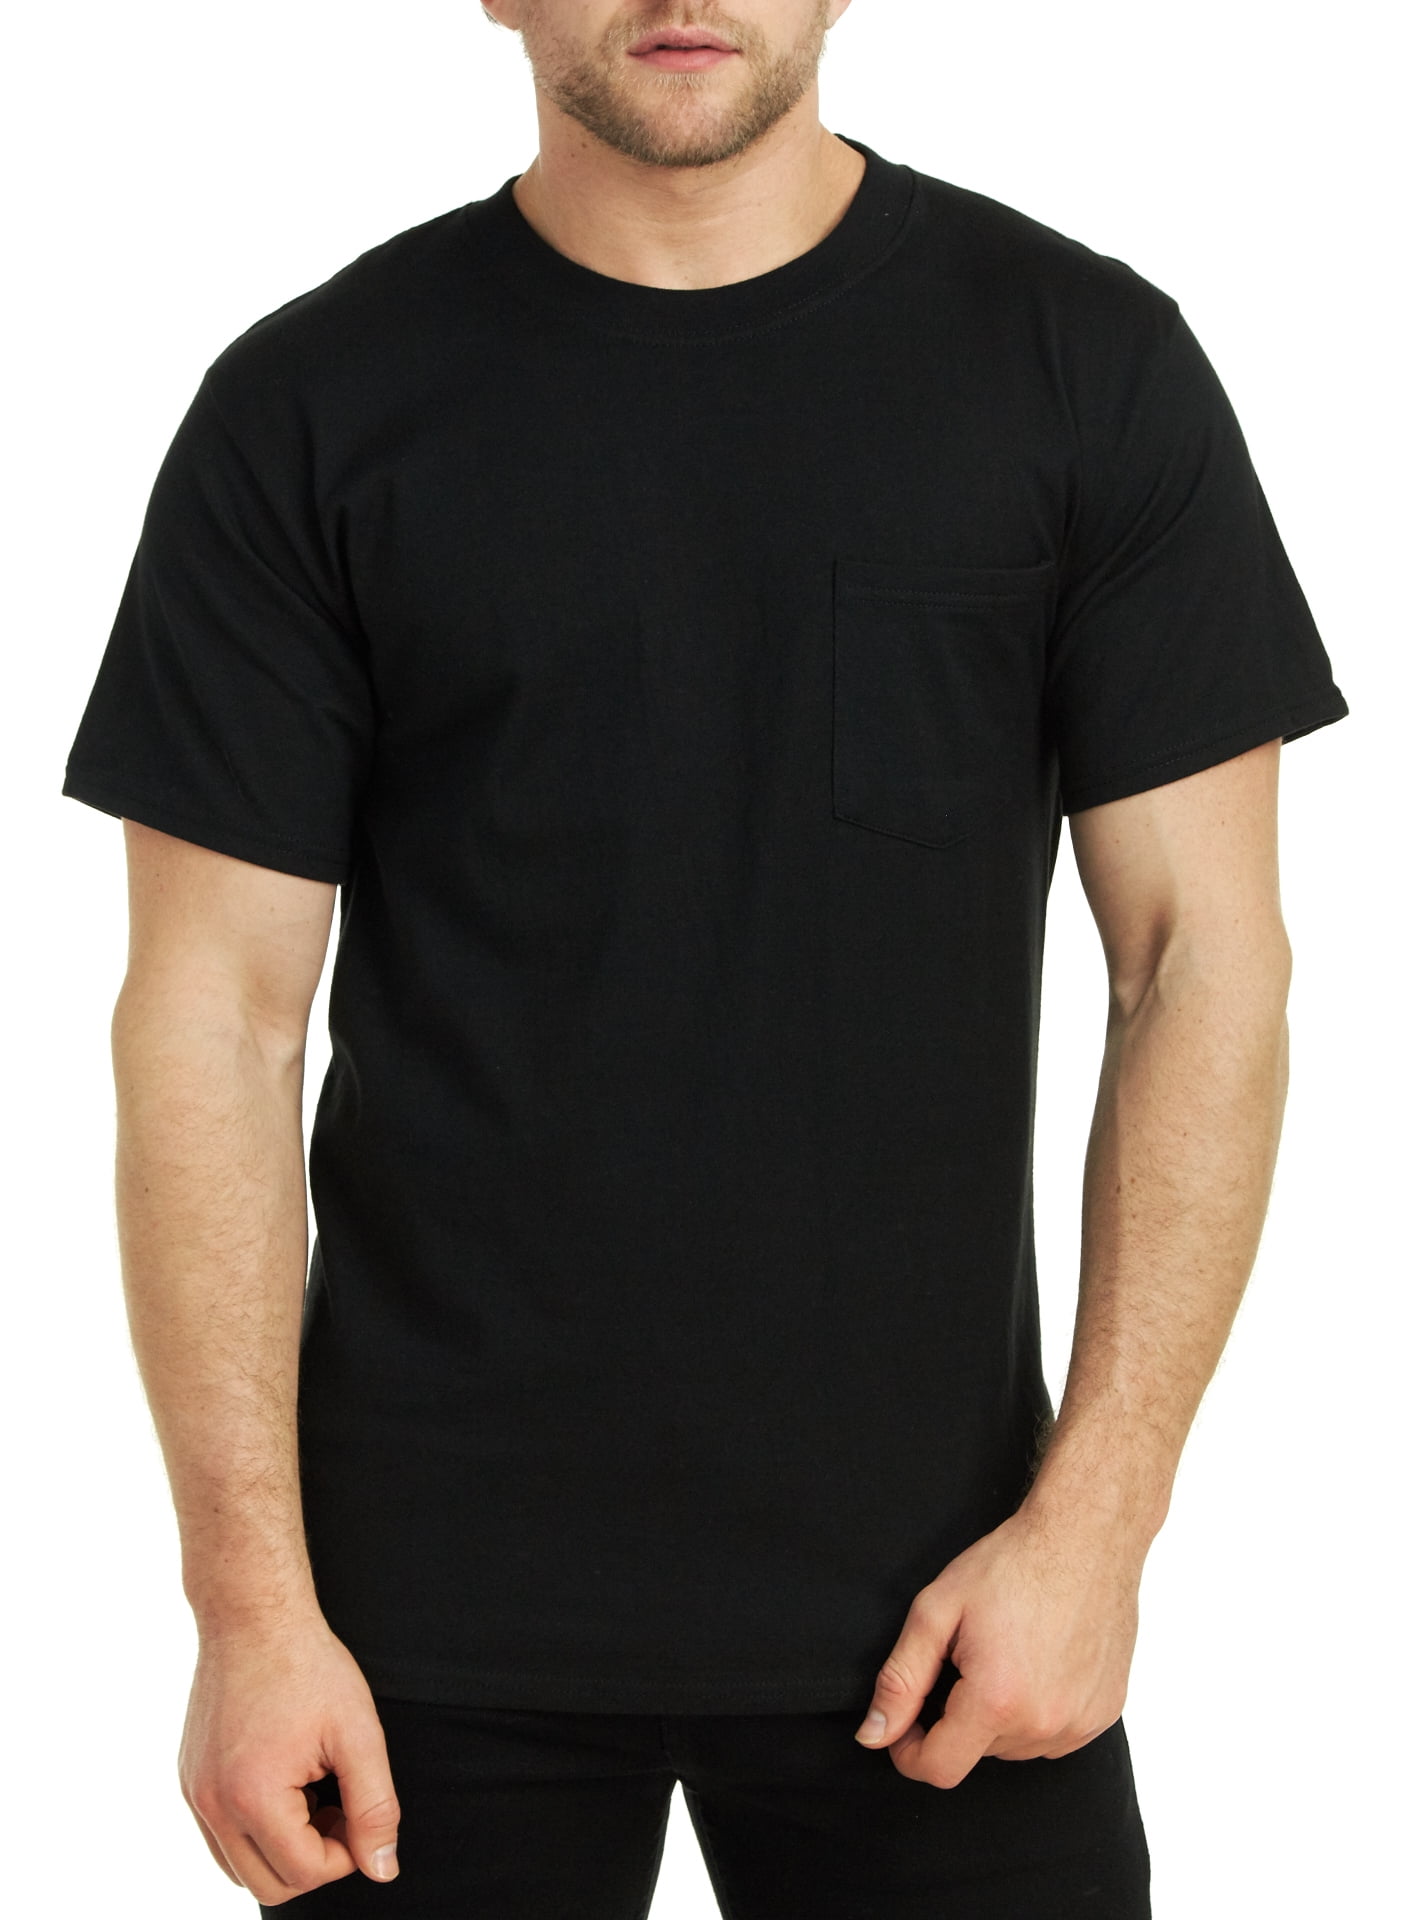 Hanes Short Sleeve Beefy-T Pocket T-Shirts, Black, Large - Walmart.com ...